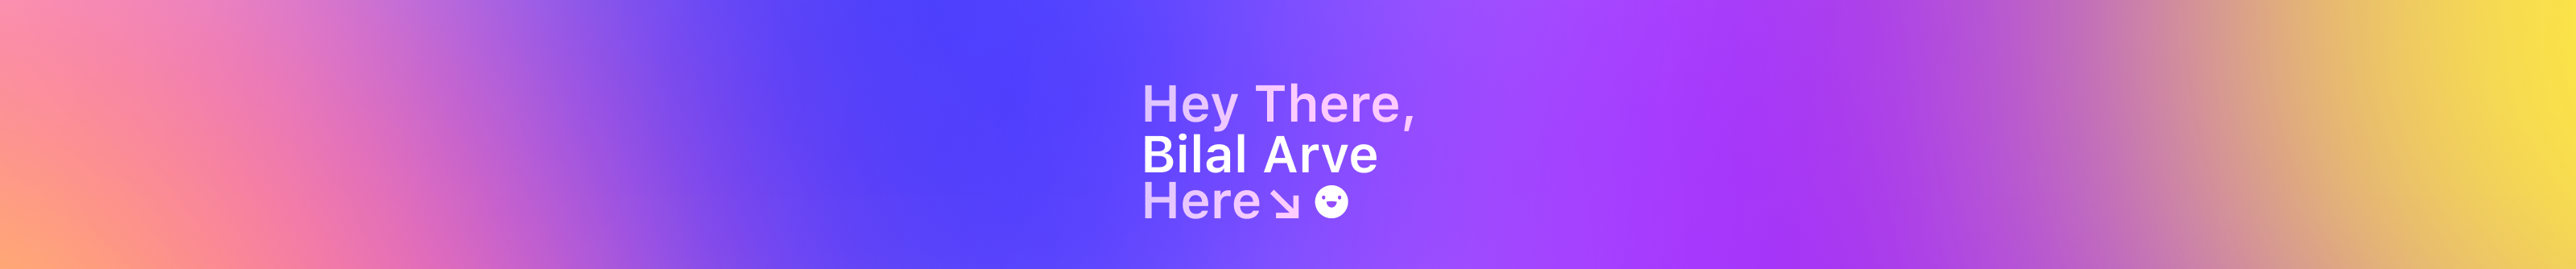 Muhammad Bilal Arve's profile banner